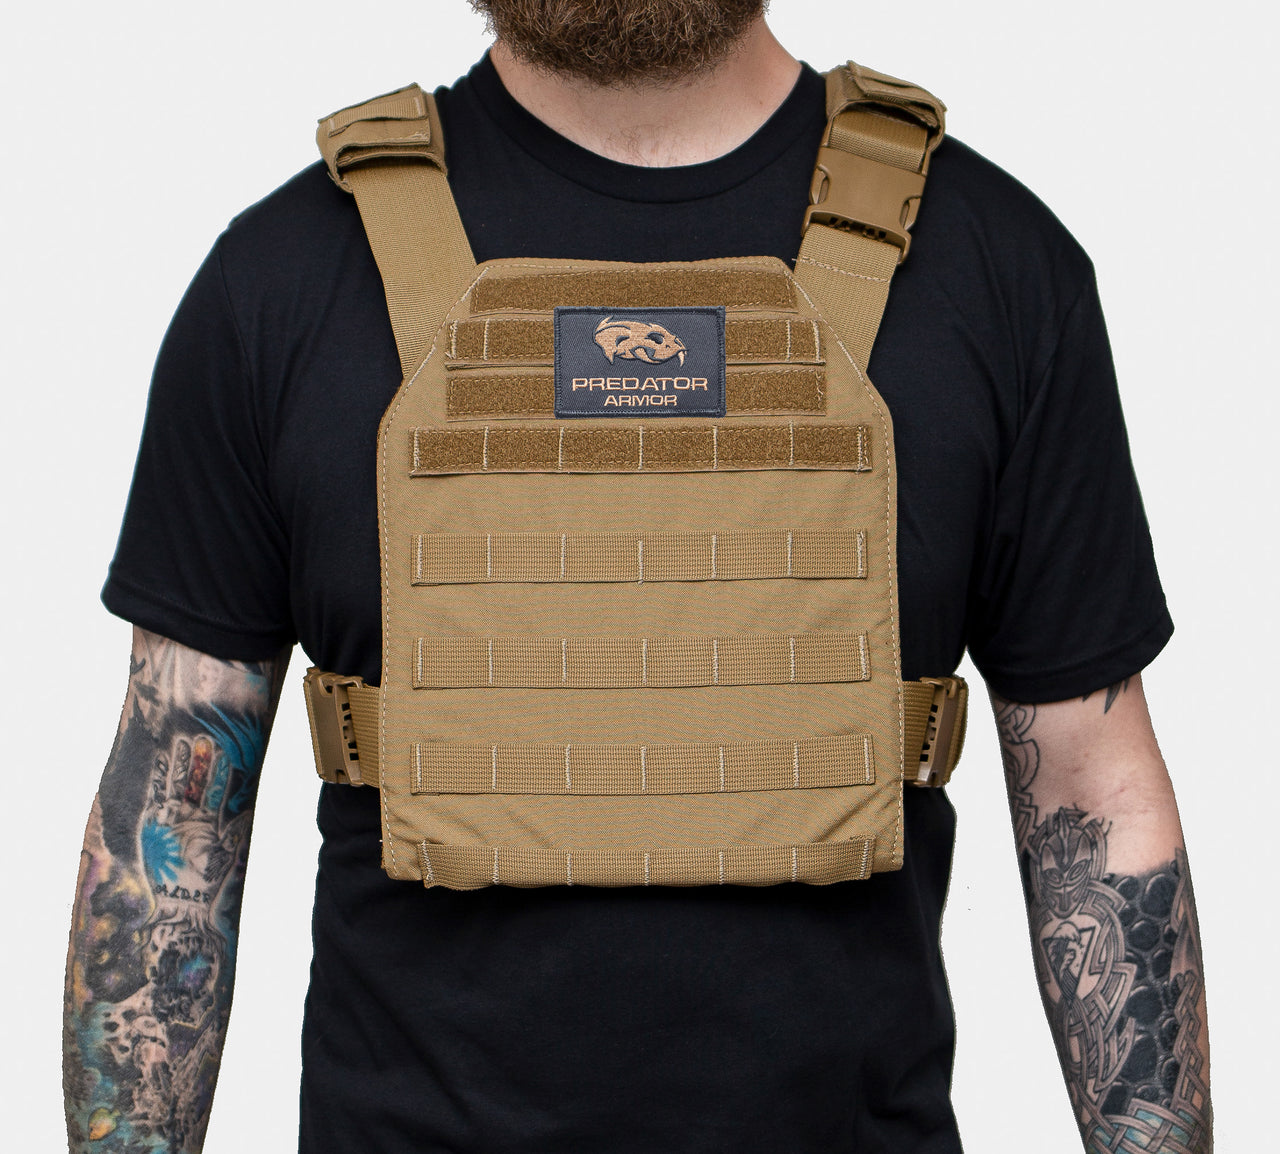 A man with a beard and tattoos wearing a Predator Armor Minuteman Plate Carrier.